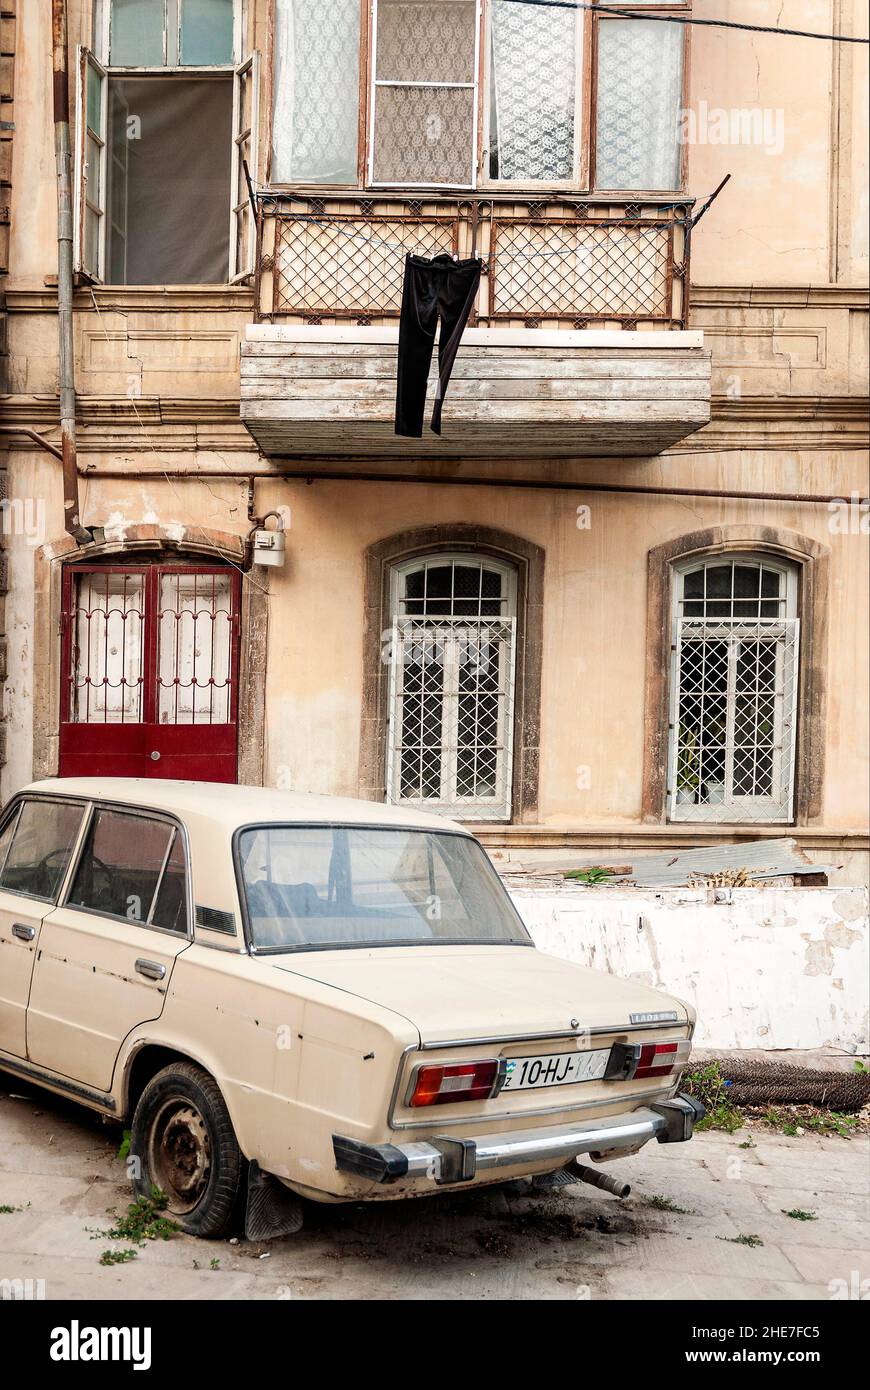 baku city old town street view in azerbaijan with vintage old soviet car Stock Photo